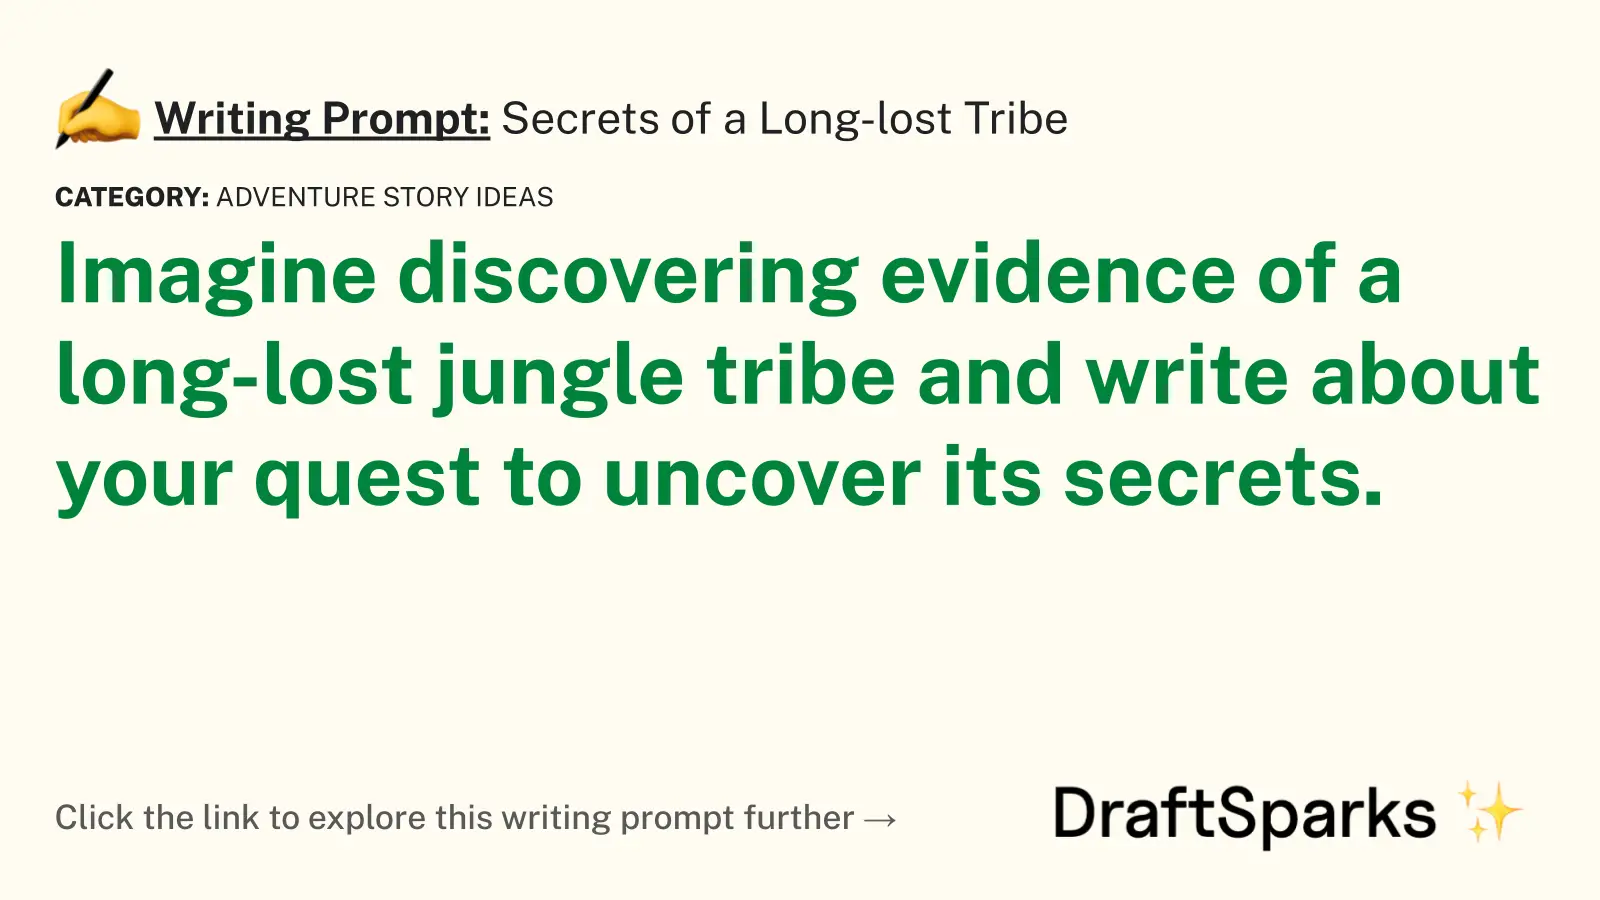 Secrets of a Long-lost Tribe